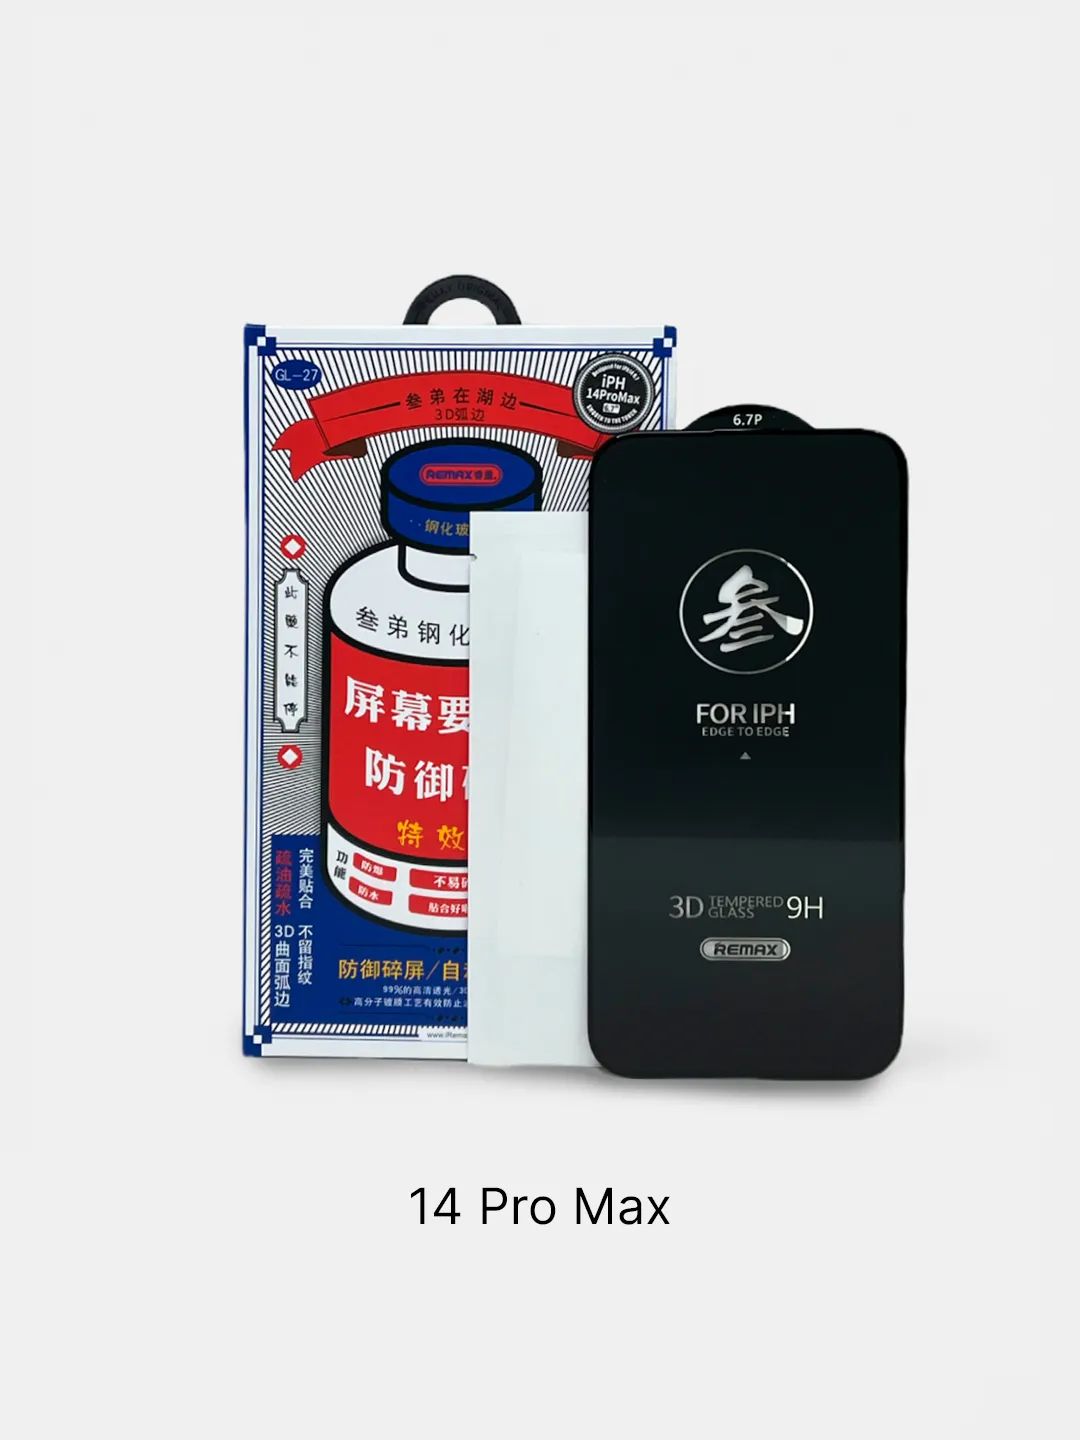 15 Pro Max стекло Remax. Стекло Remax iphone 15 Pro. Стелокдо Ремакс iphone 15 Pro Max. Защитное стекло Remax gl-27 для iphone 15 Pro Max (черное). Защитное стекло remax iphone 15